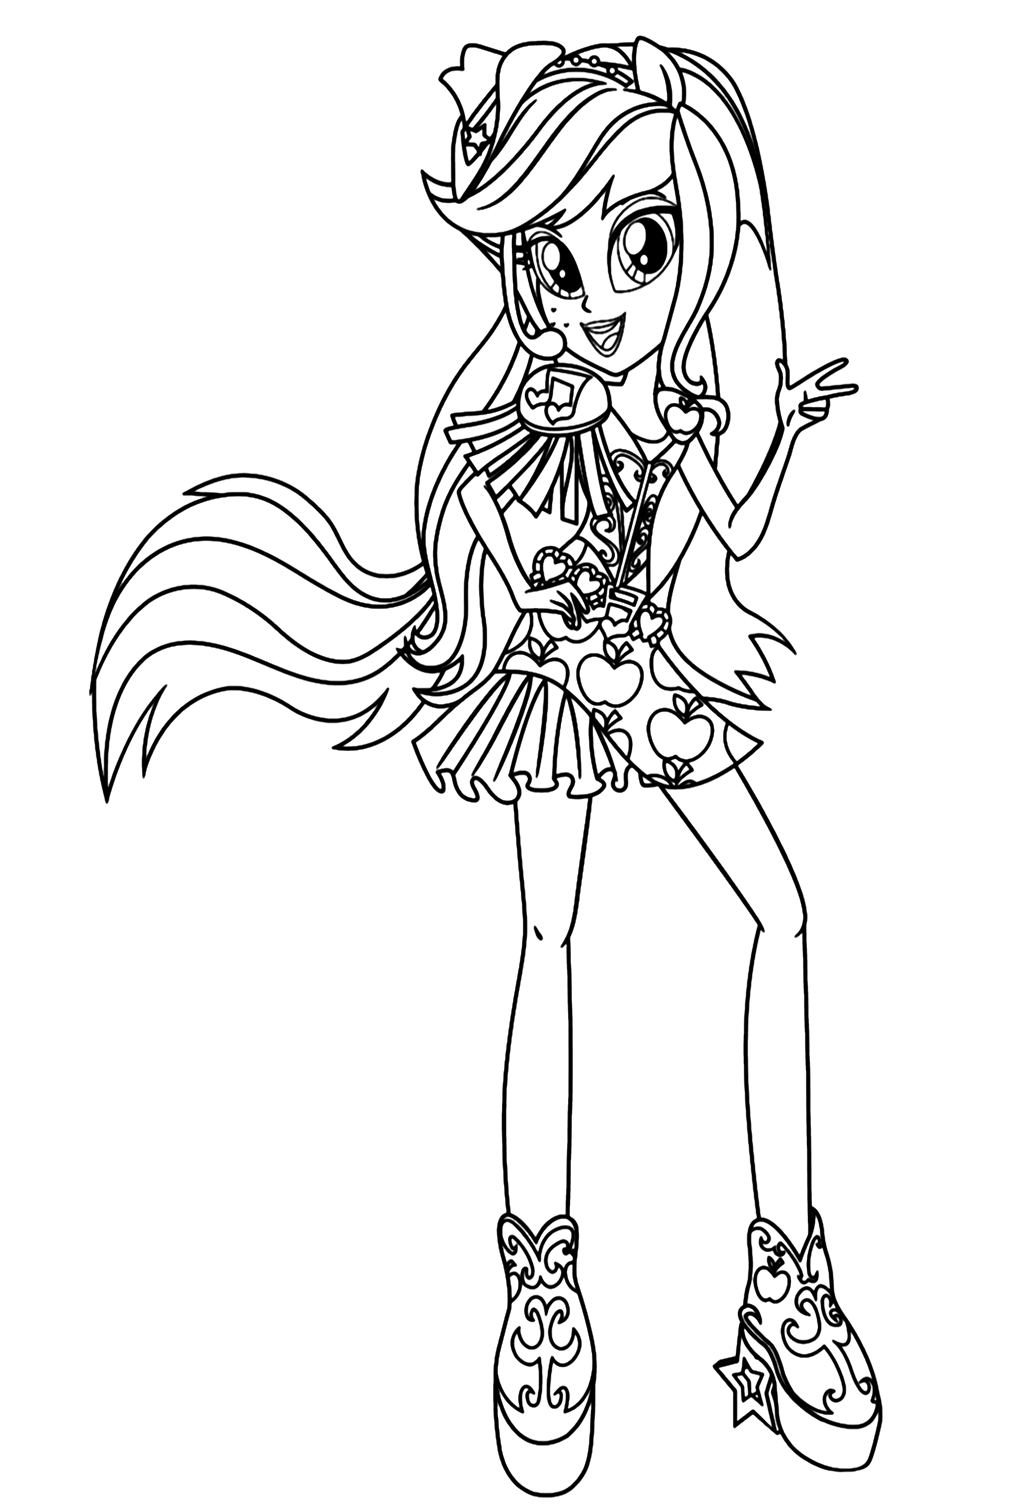 Desenho para colorir da menina de Applejack Equestria